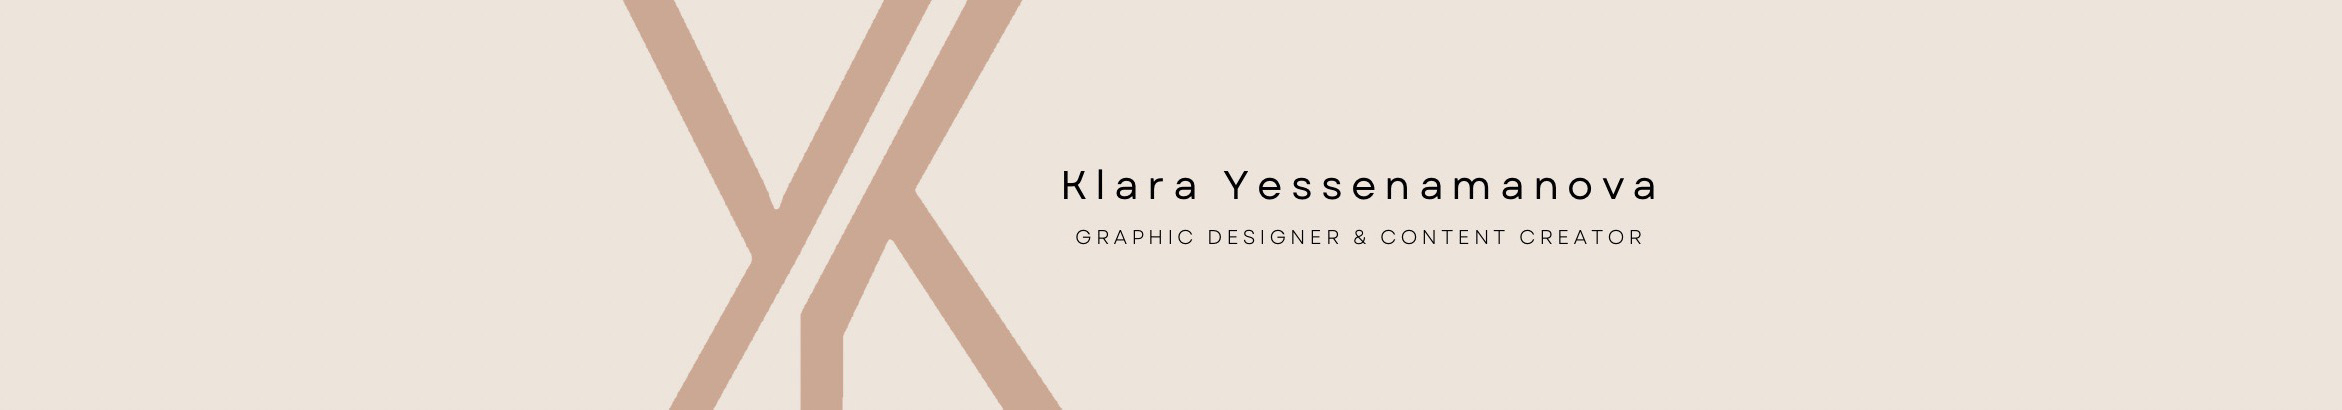 Klara Yessenamanova's profile banner